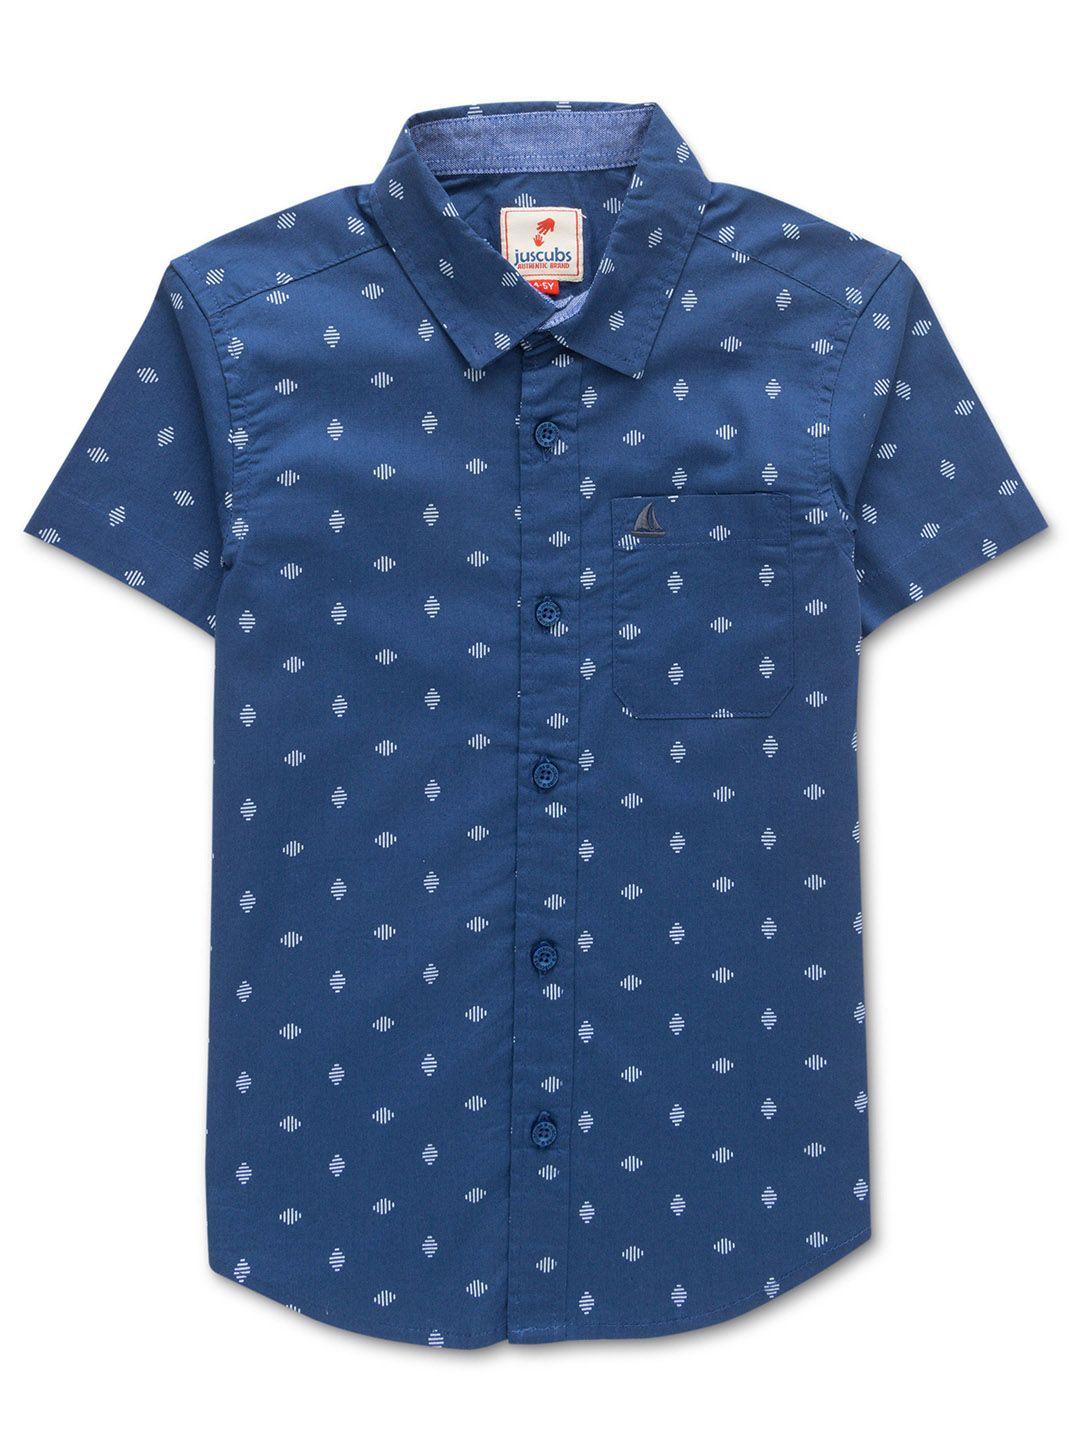 juscubs boys navy blue premium opaque printed casual shirt